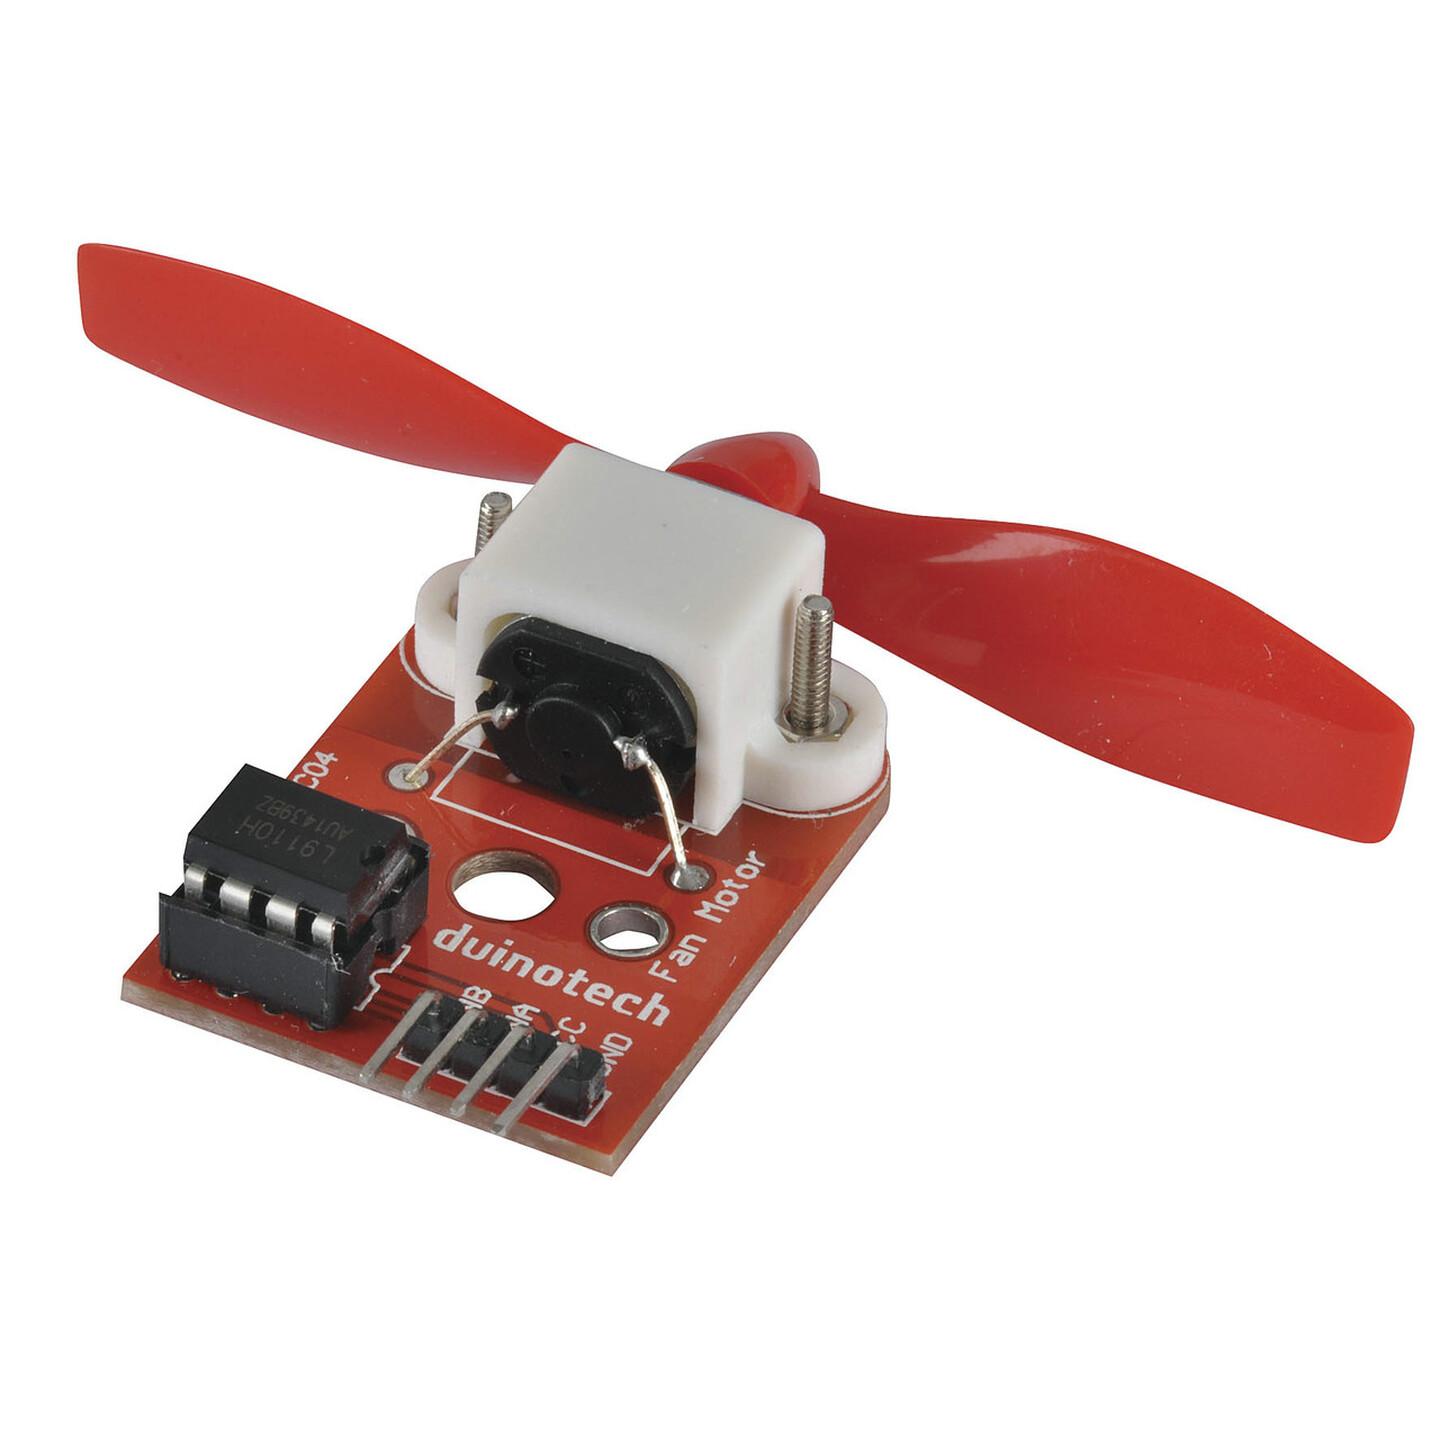 Arduino Compatible Fan with Propeller Module